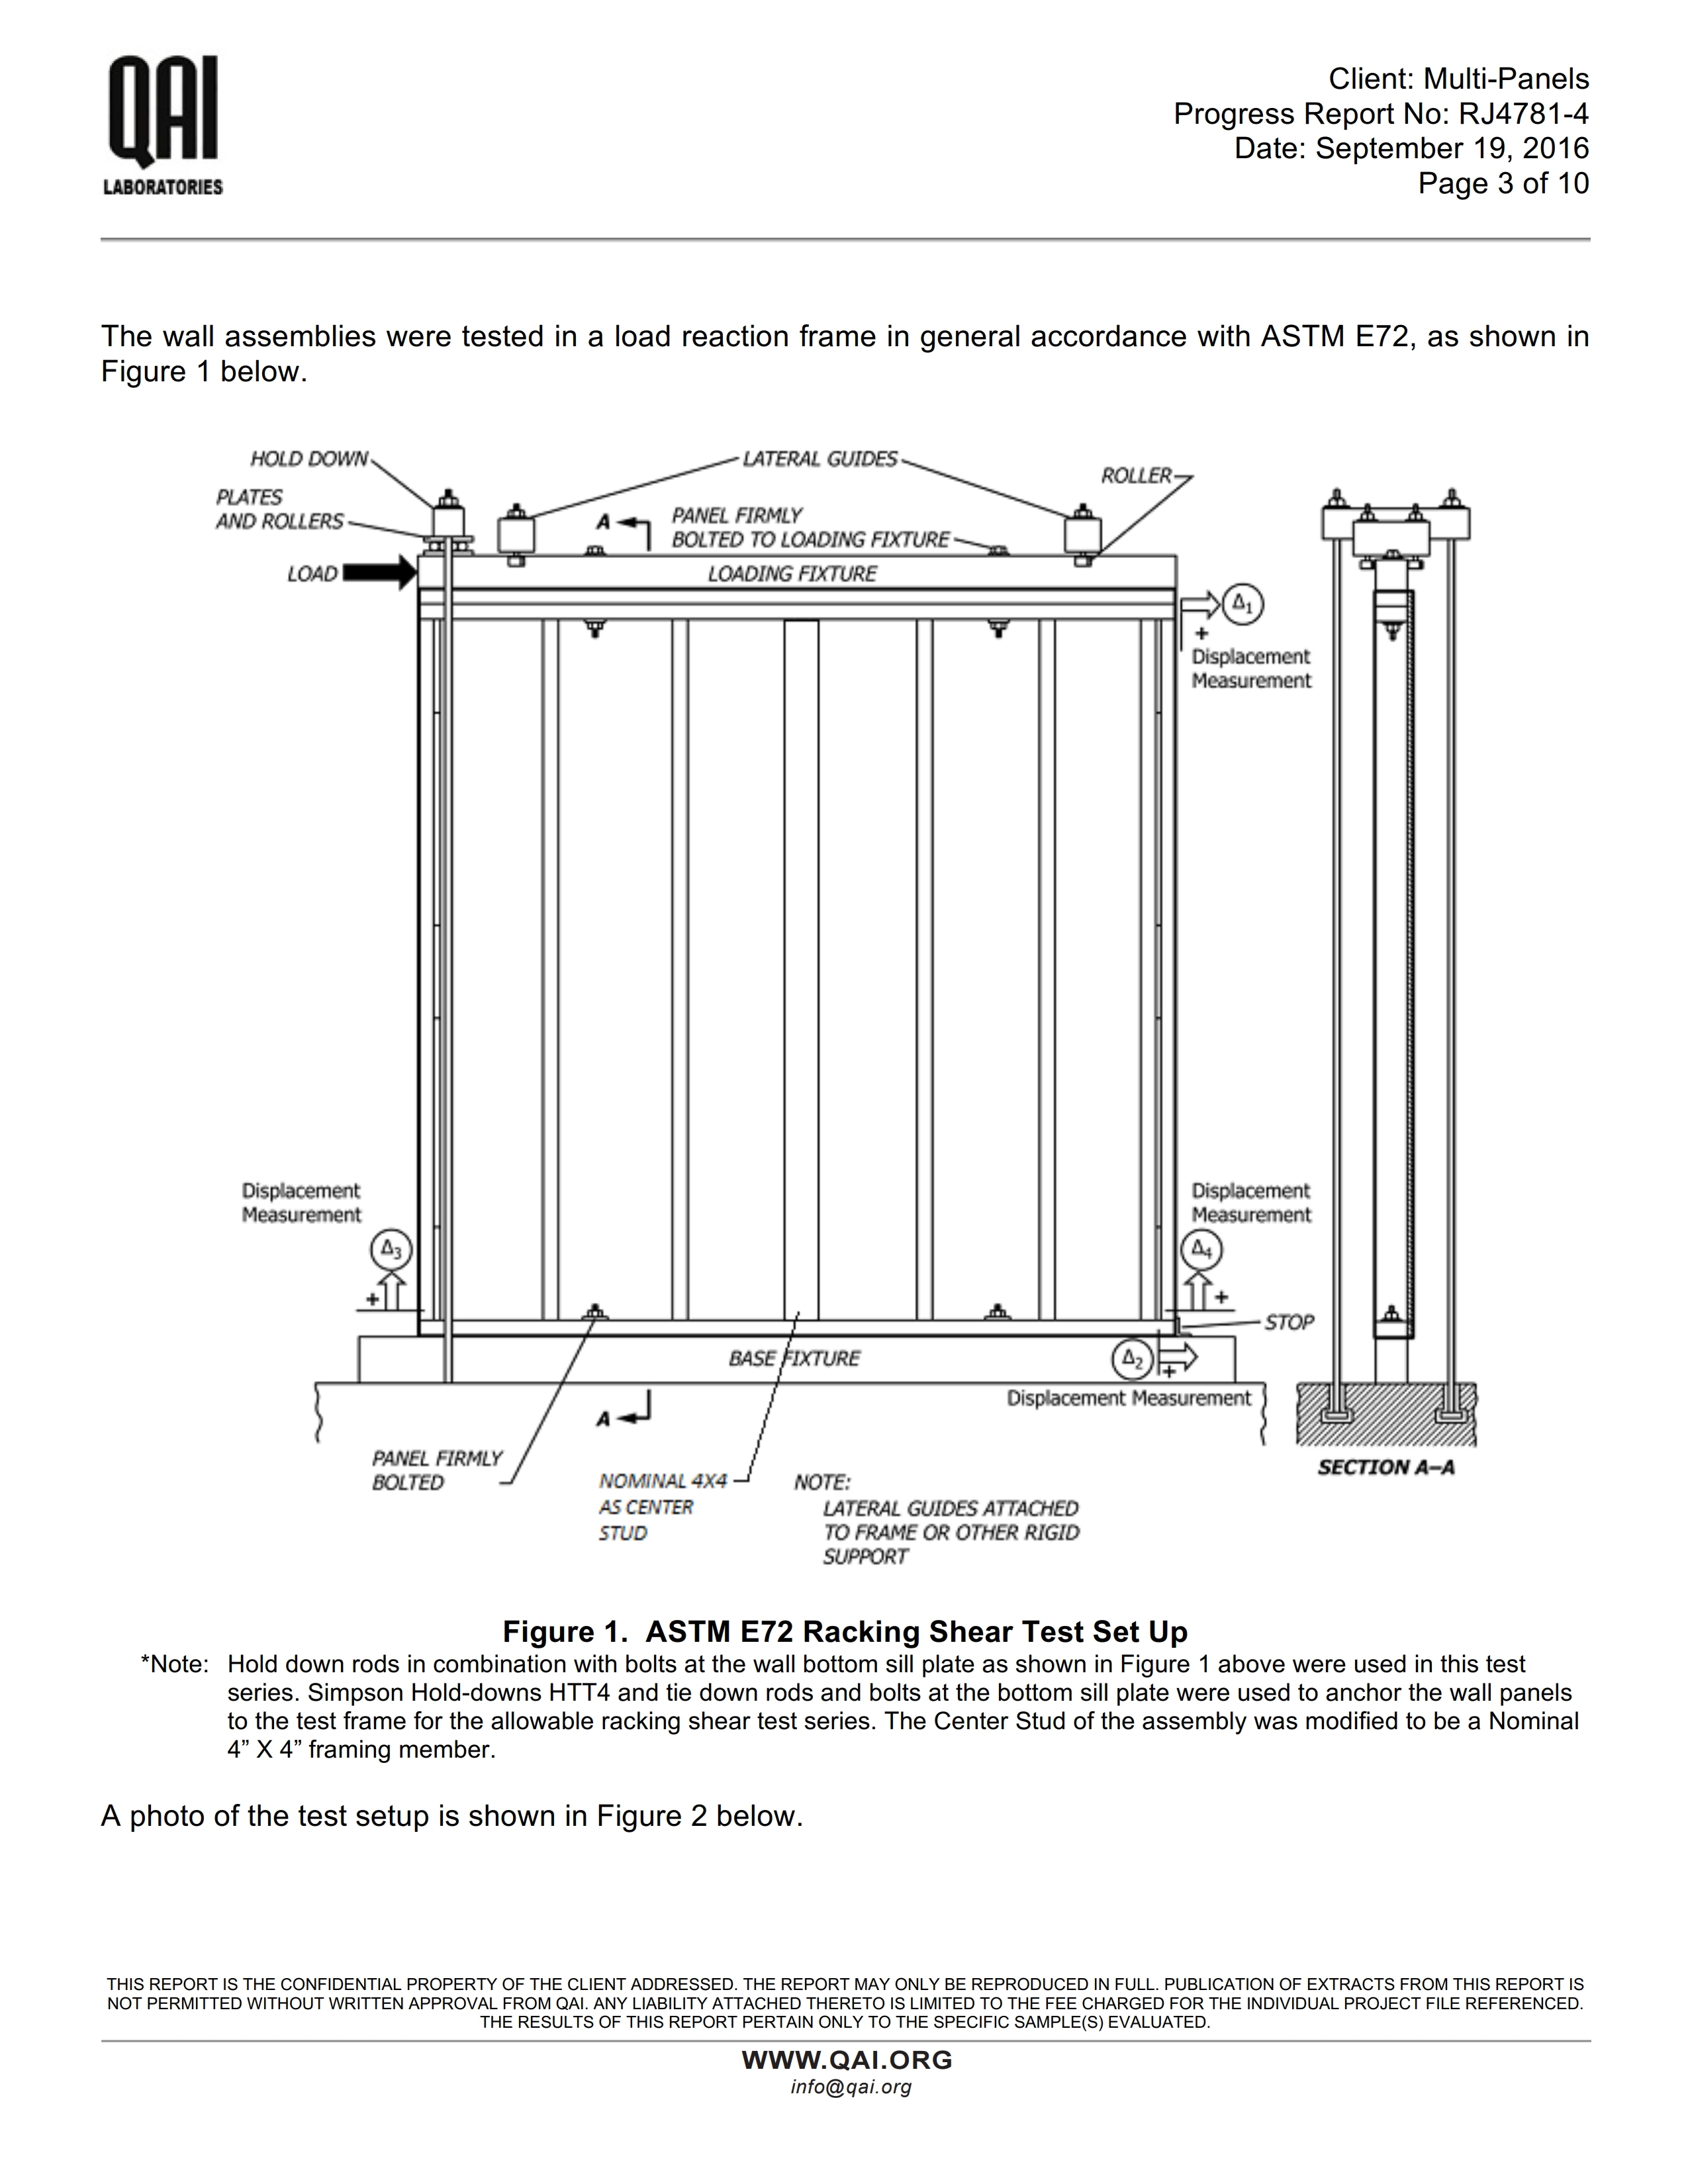 RJ4781P-1-Multi-Panels-Report-E72 Racking Shear-092316_rev by AT_M4 (1).pdf_page_03.jpg